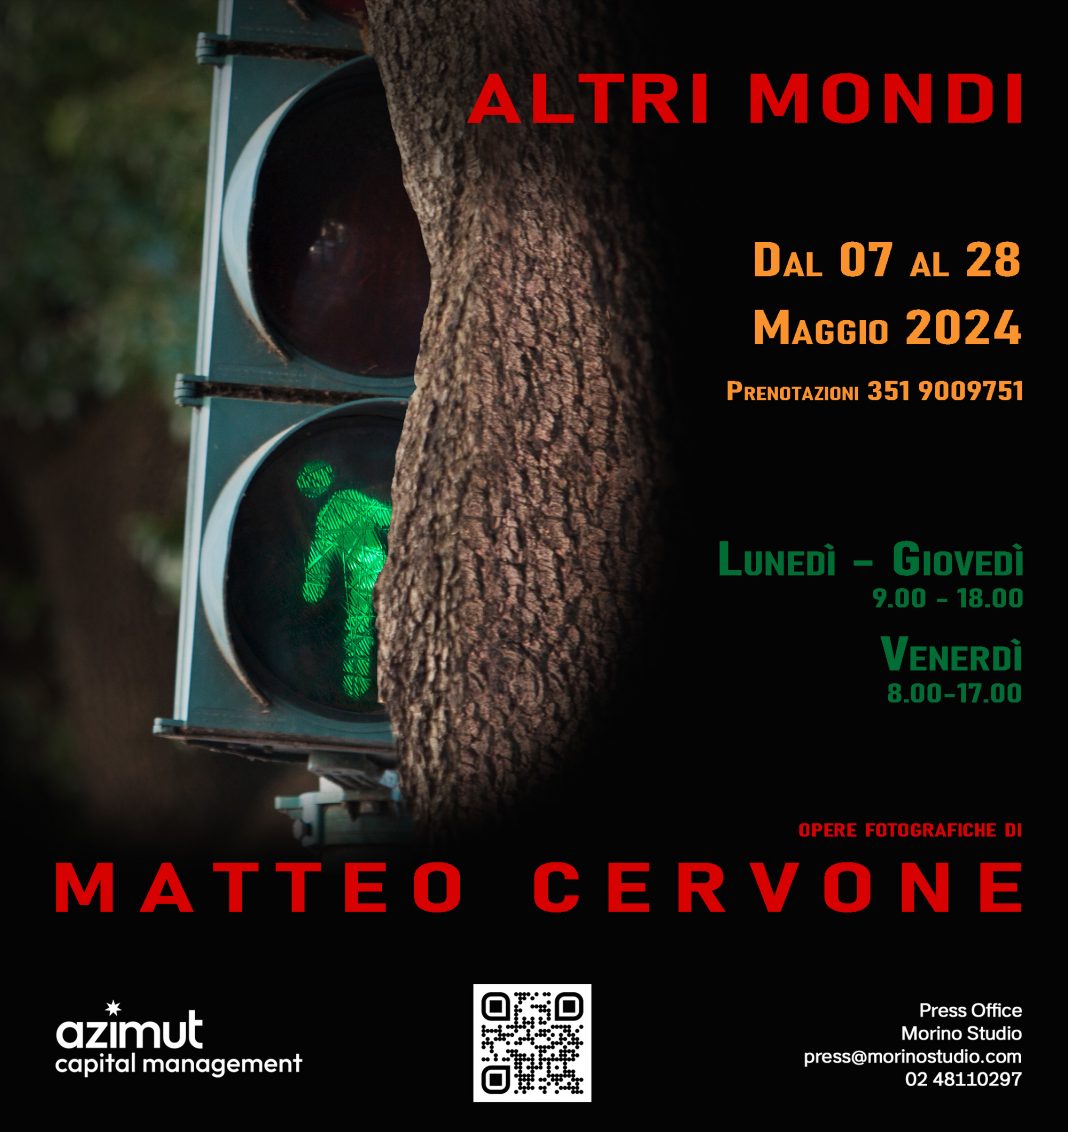 MATTEO CERVONE – ALTRI MONDIhttps://www.exibart.com/repository/media/formidable/11/img/23f/Morino-Studio-Altri-Mondi-Matteo-Cervone-1068x1132.jpg